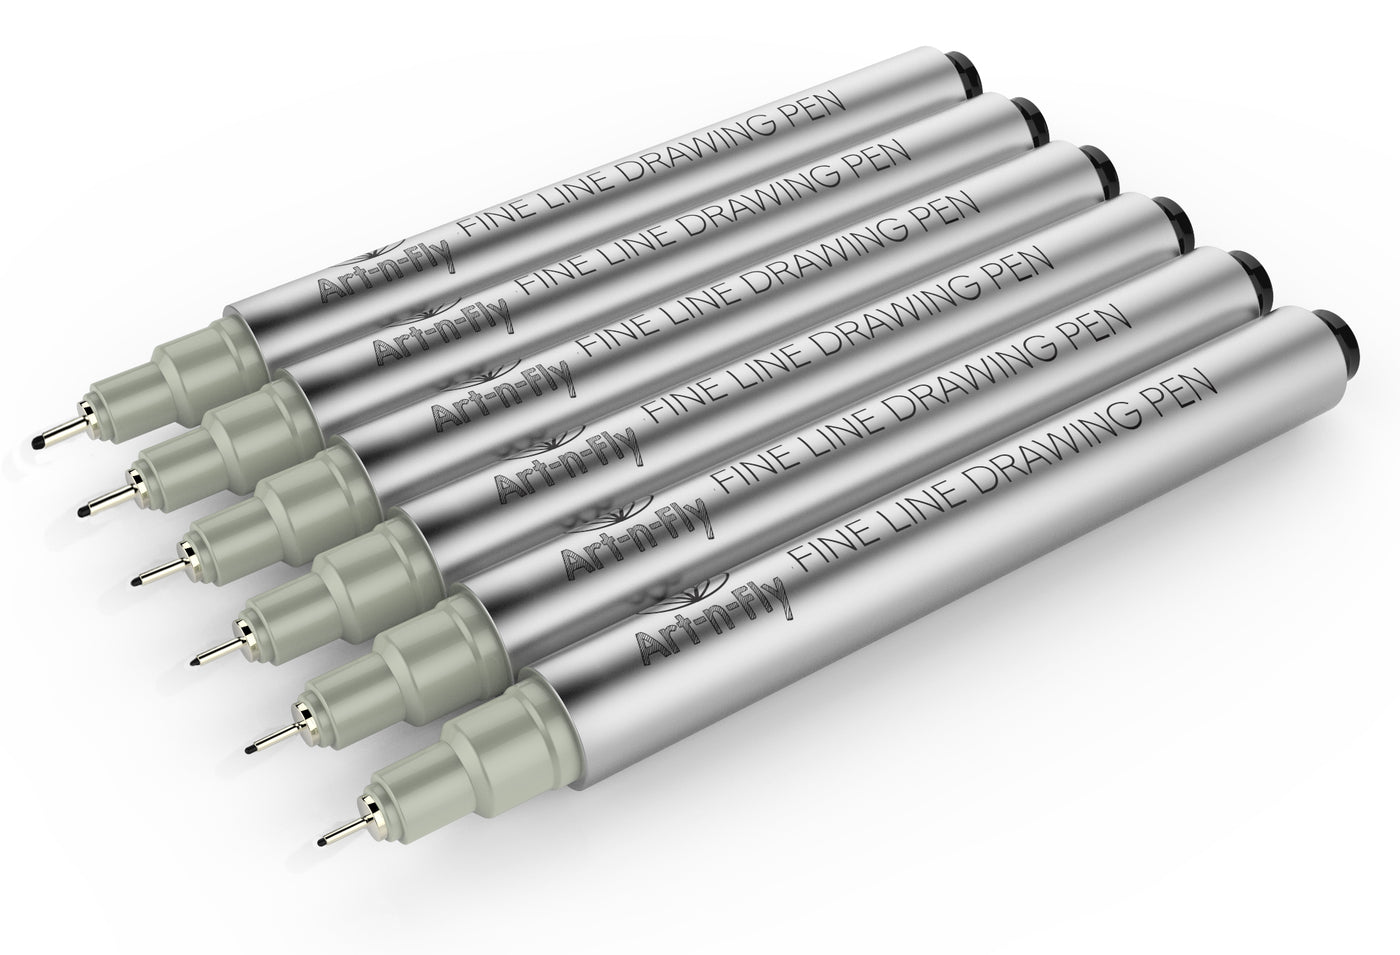 Micro Fineliner Needle Pen Fine Liner Pens Hand-painted Pigment